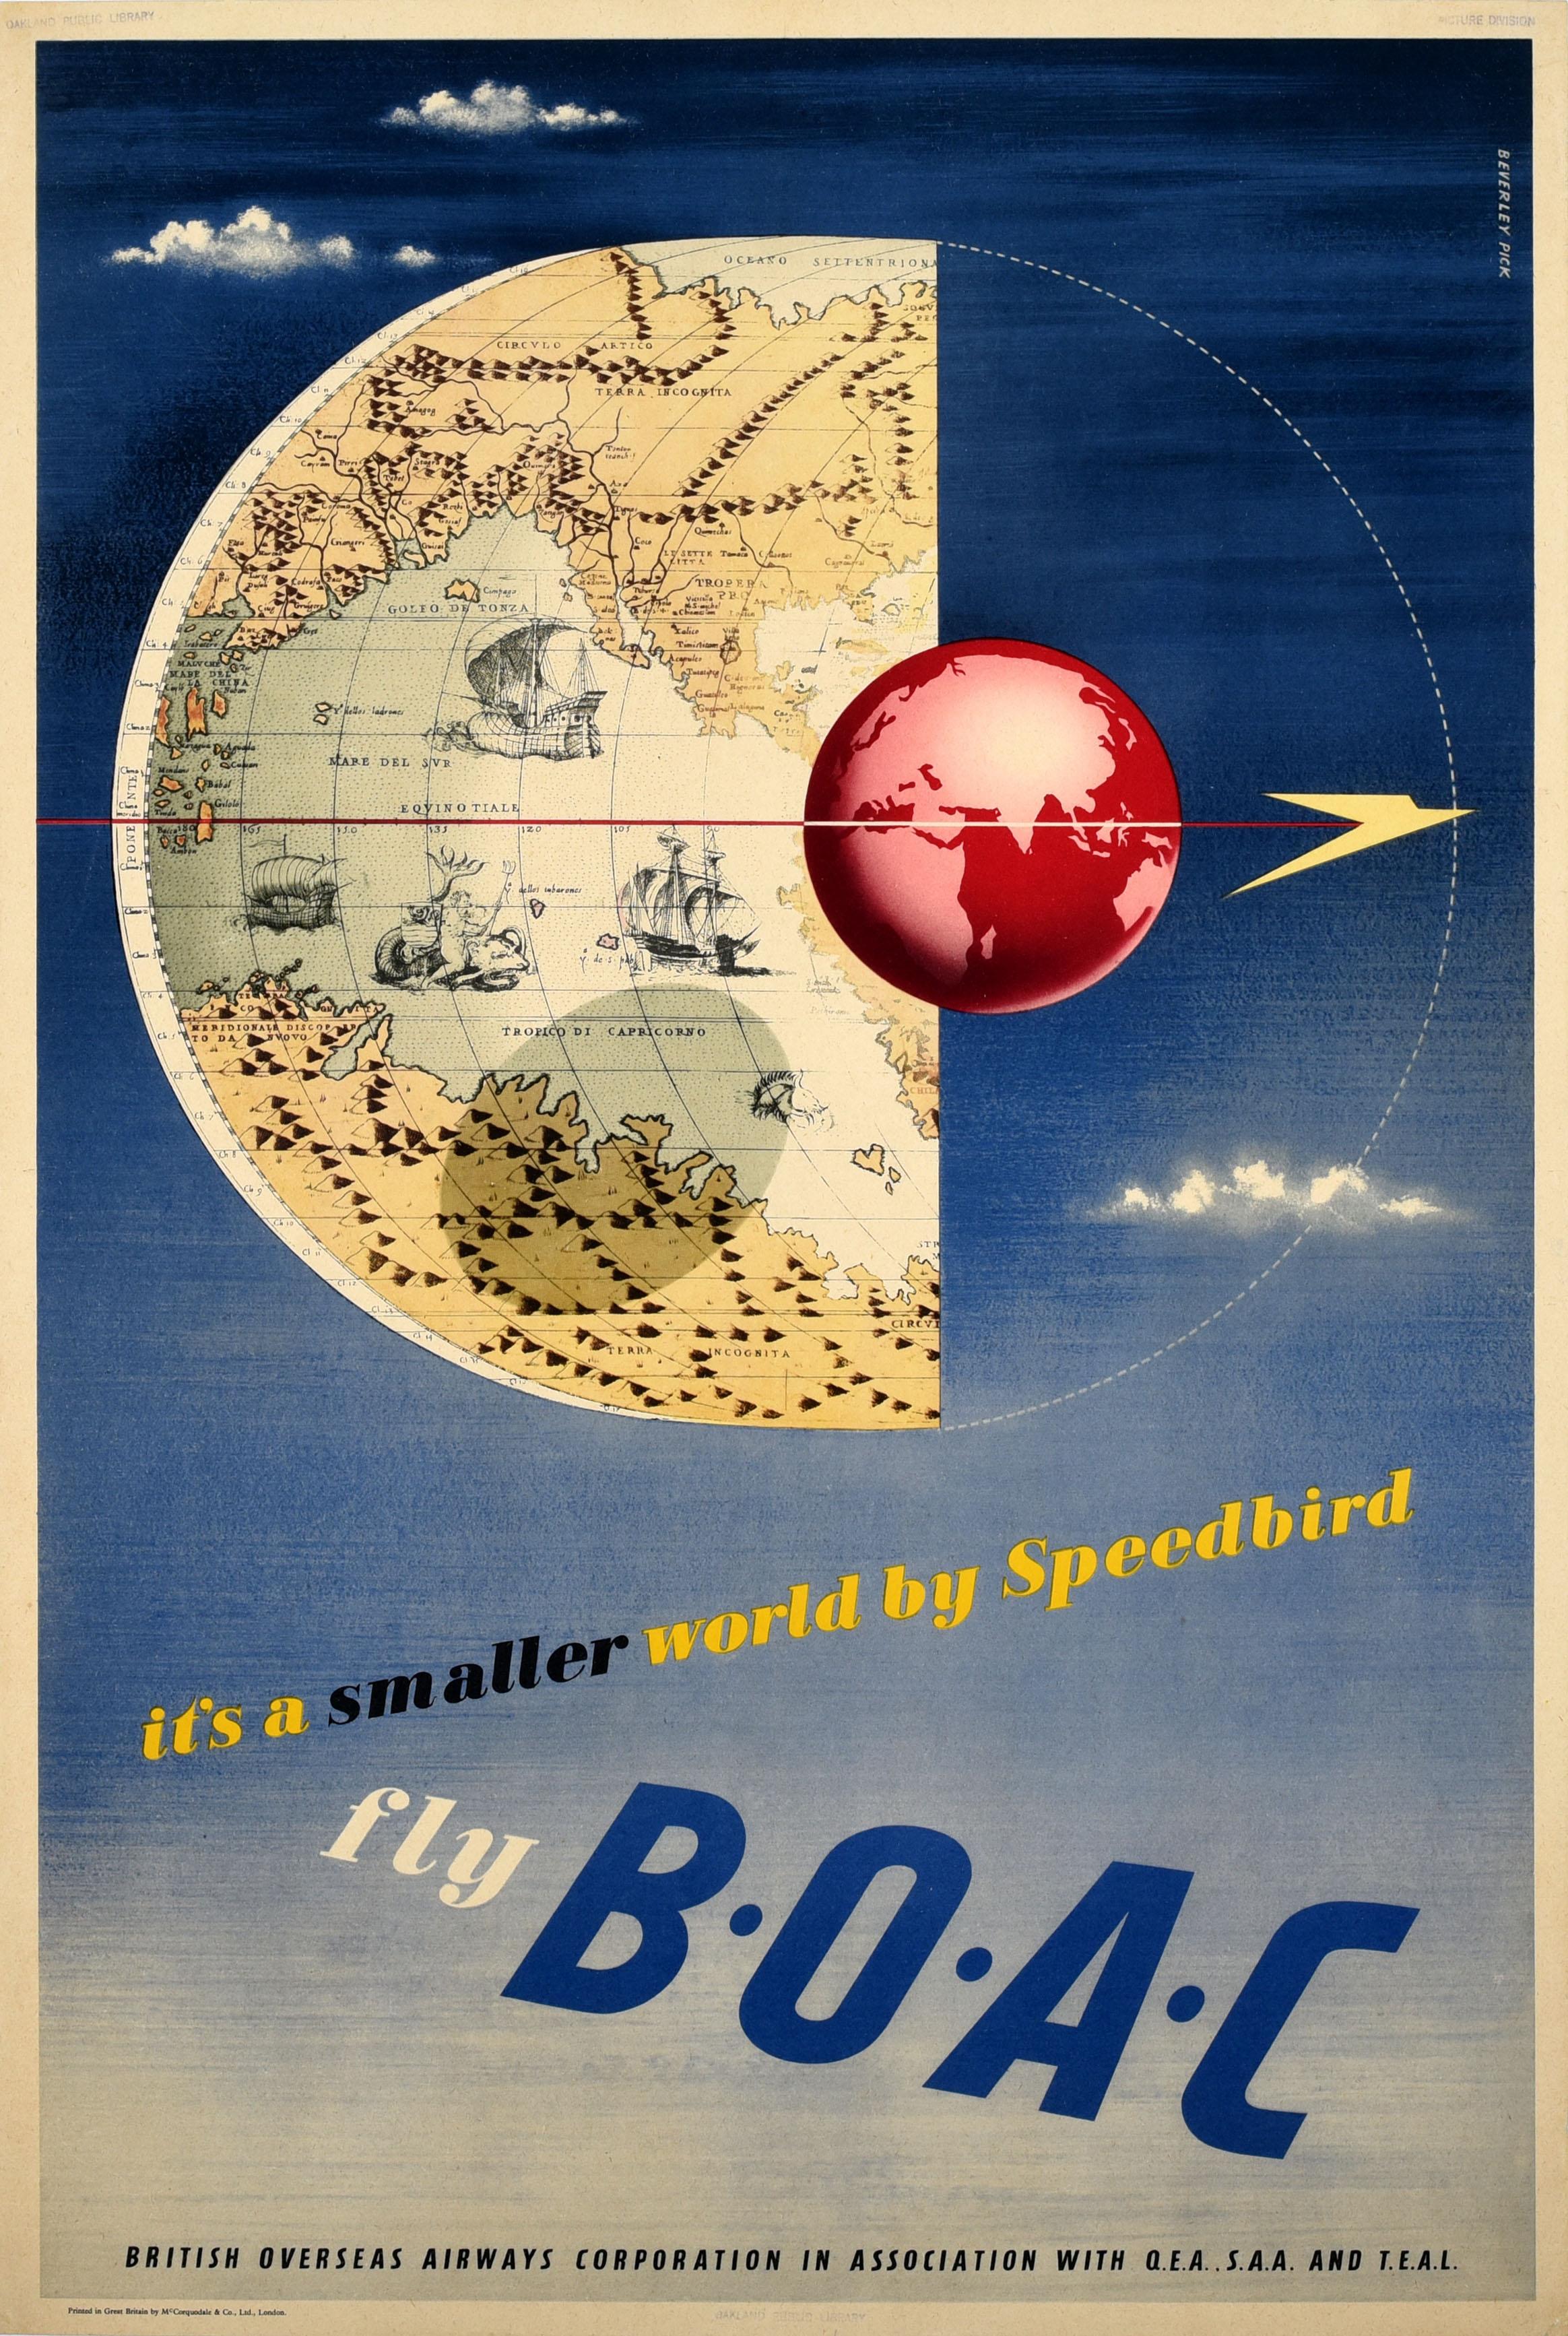 Beverley Pick Print - Original Vintage Travel Advertising Poster BOAC Smaller World By Speedbird 1950s